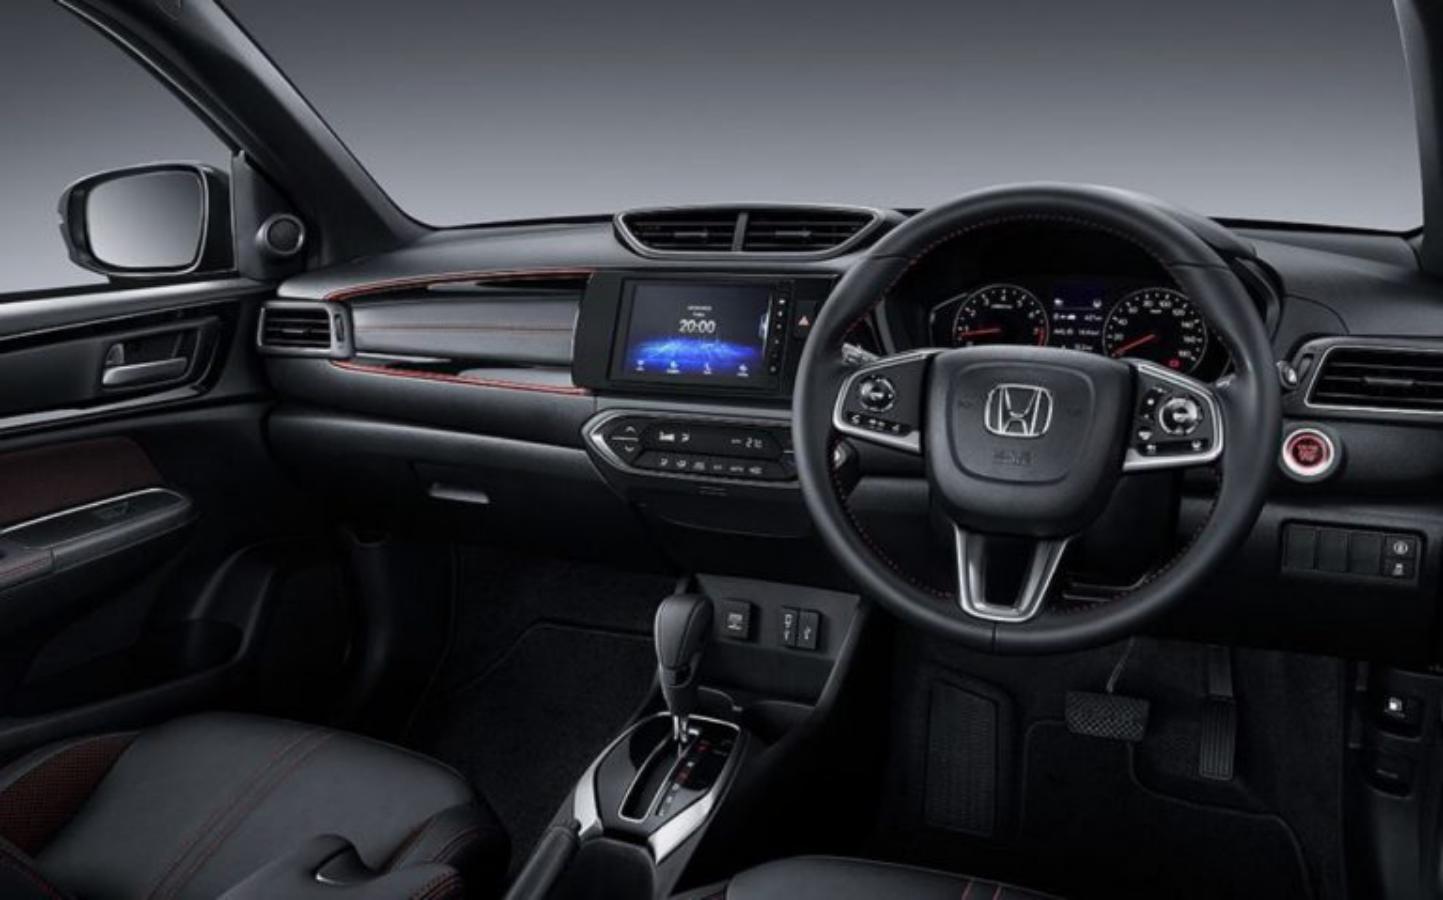 Honda WRV 2023, Cek Spesifikasi dan Harganya Sebelum Beli News+ on RCTI+